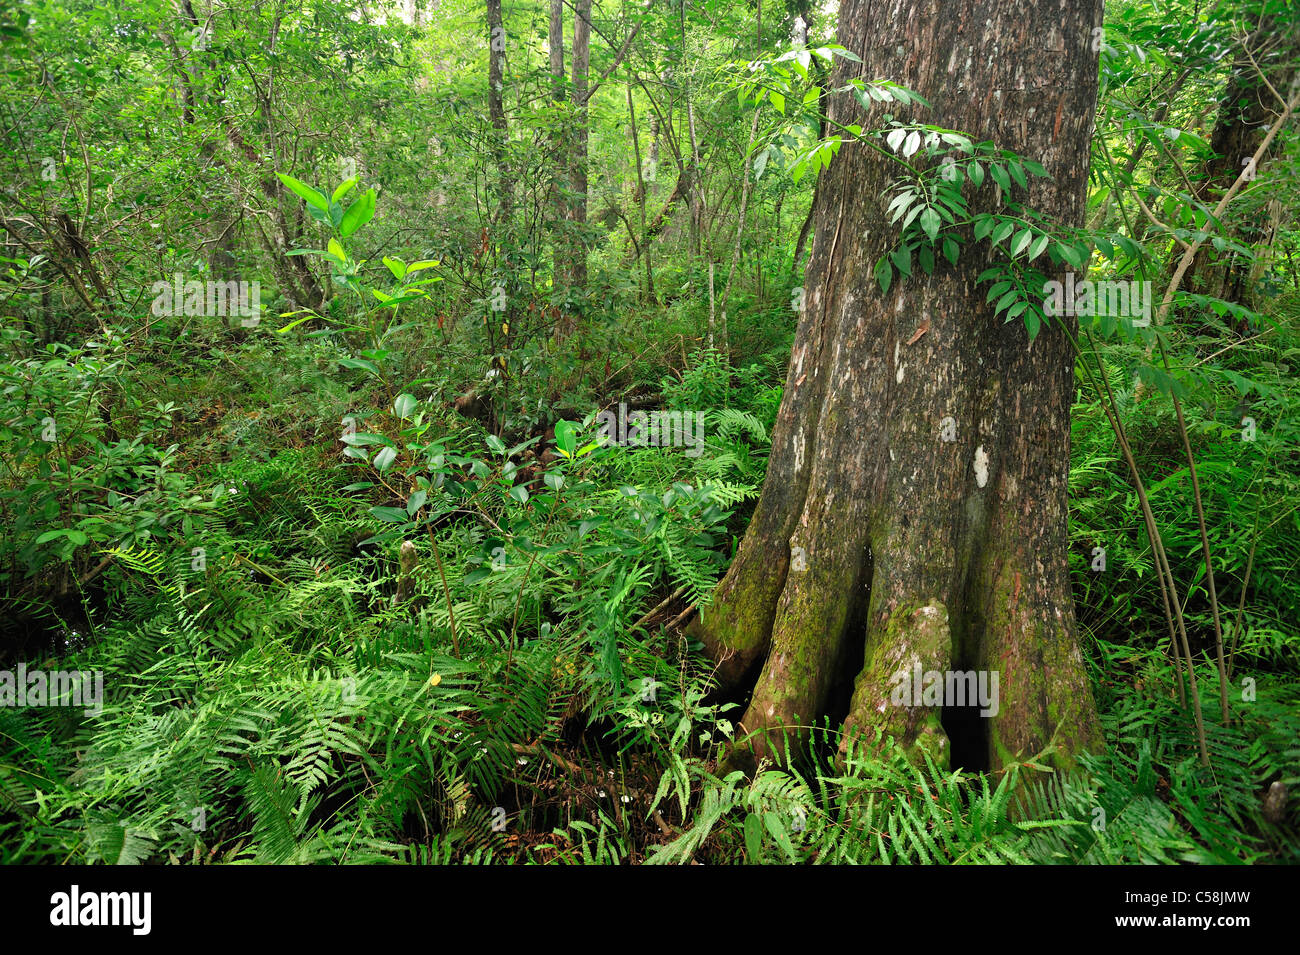 Swamp, Corkscrew Swamp, Sanctuary, near Fort Myers, Florida, USA, United States, America, tree Stock Photo